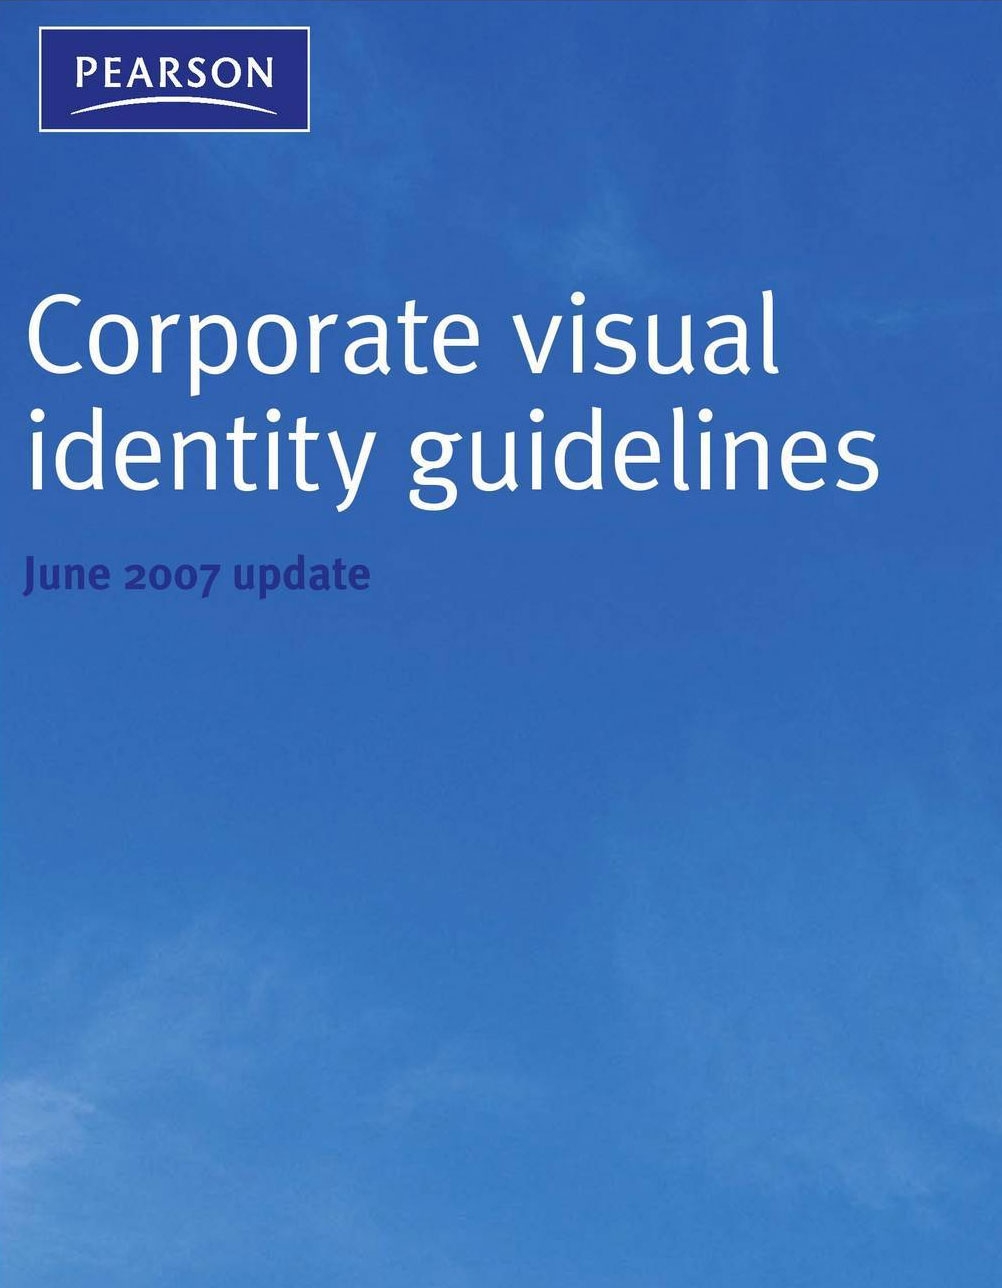 Pearson Corporate Visual Identity Guidelines